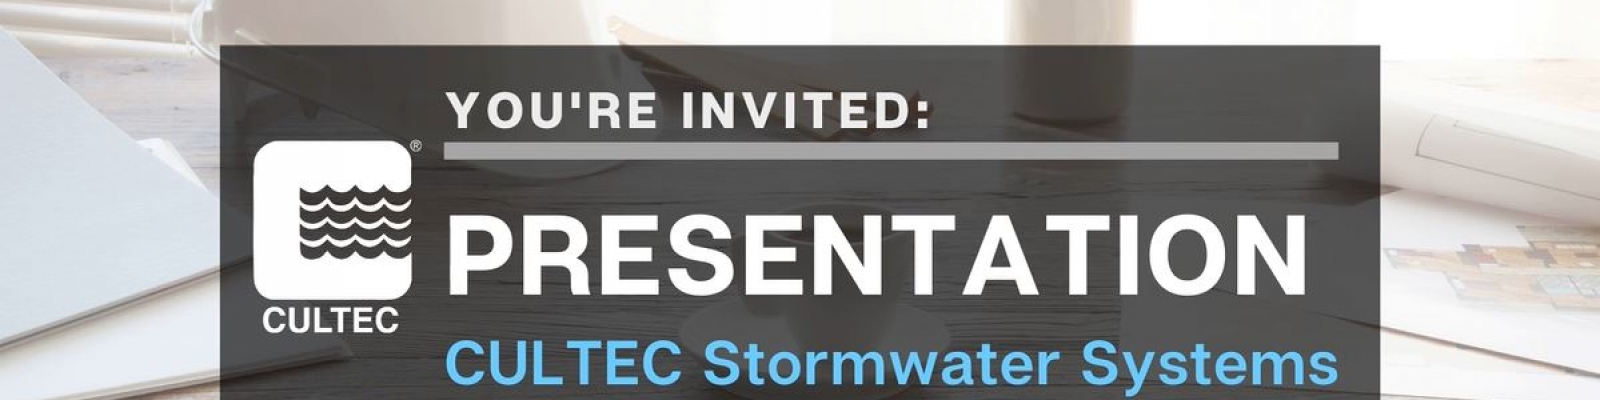 CULTEC Stormwater Chamber Presentation Promo